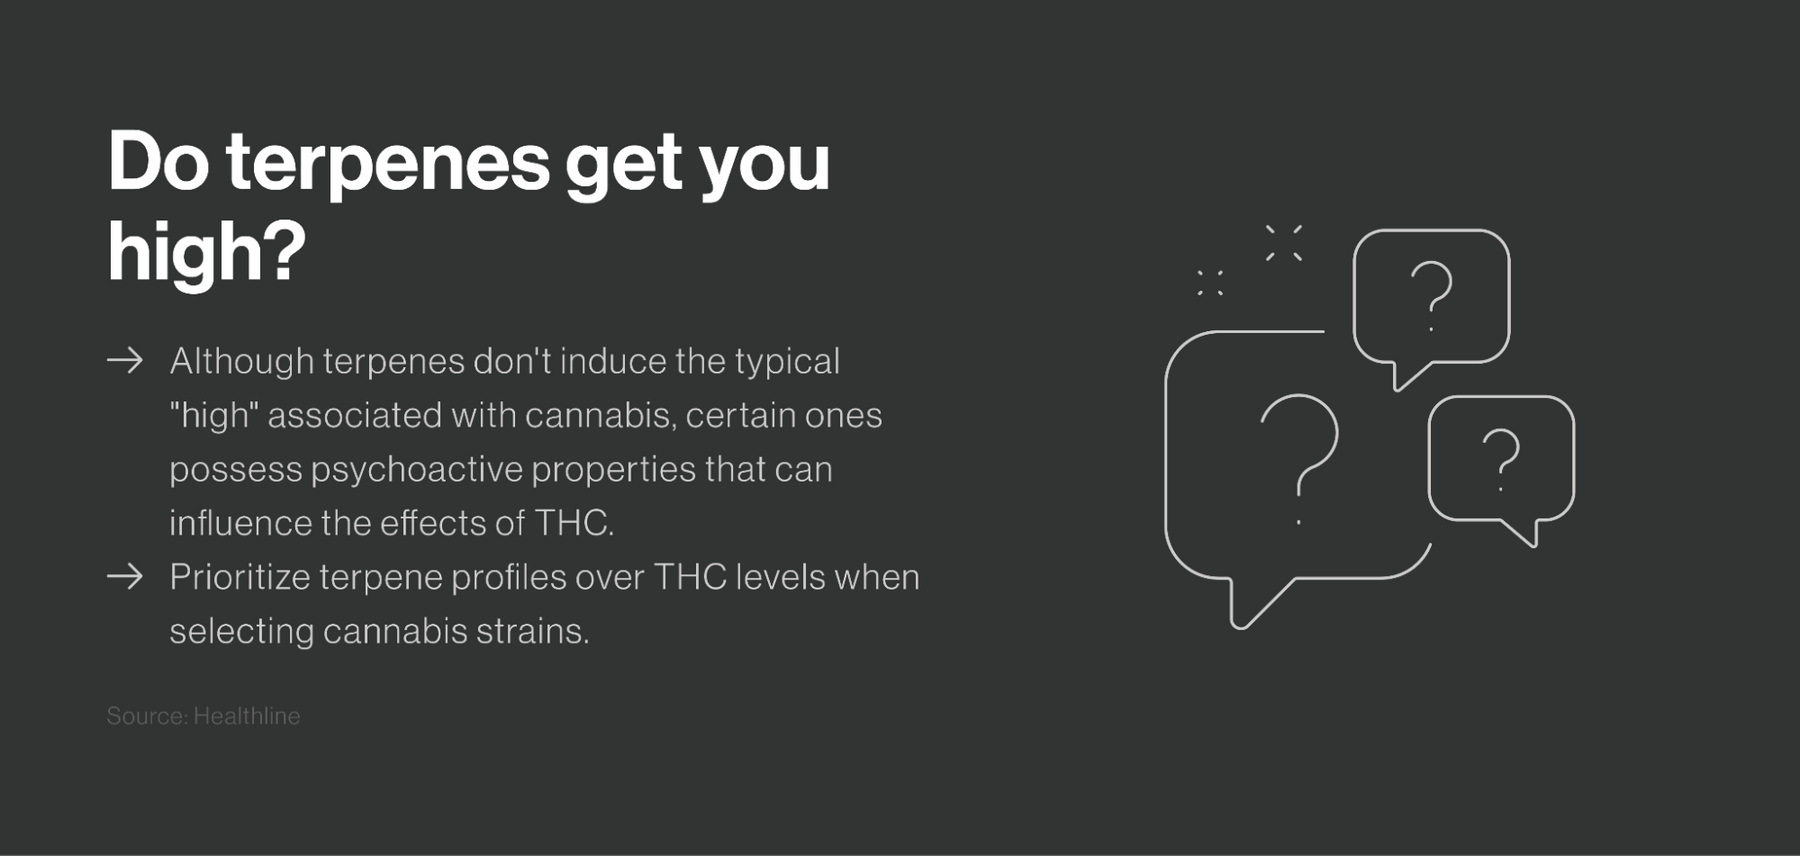 Do terpenes get you high?